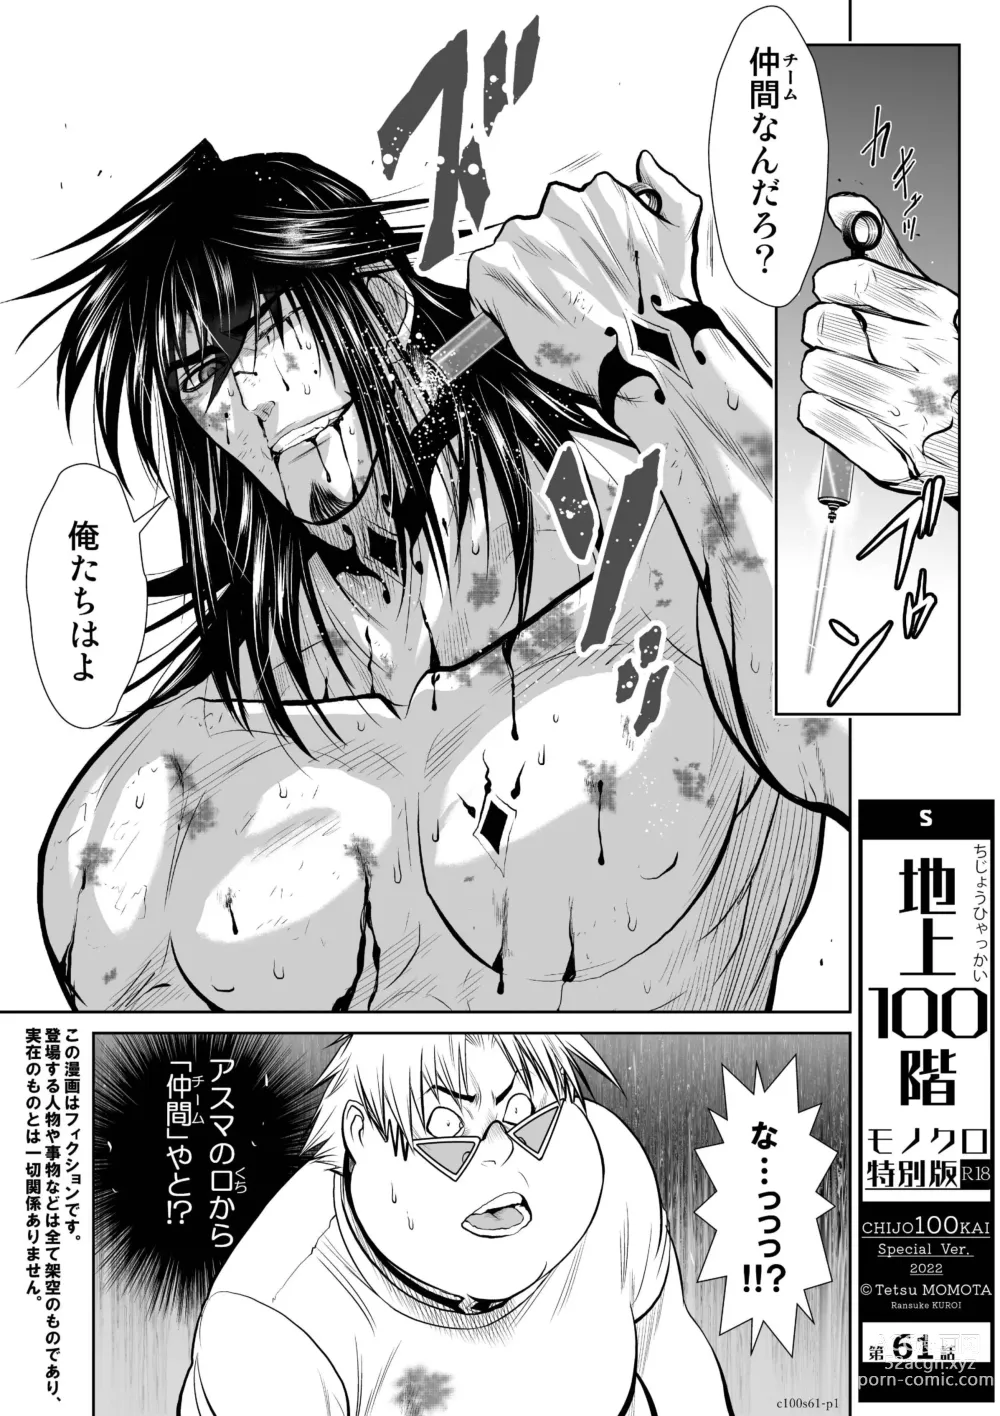 Page 1 of manga Chijou Hyakkai Ch61-70